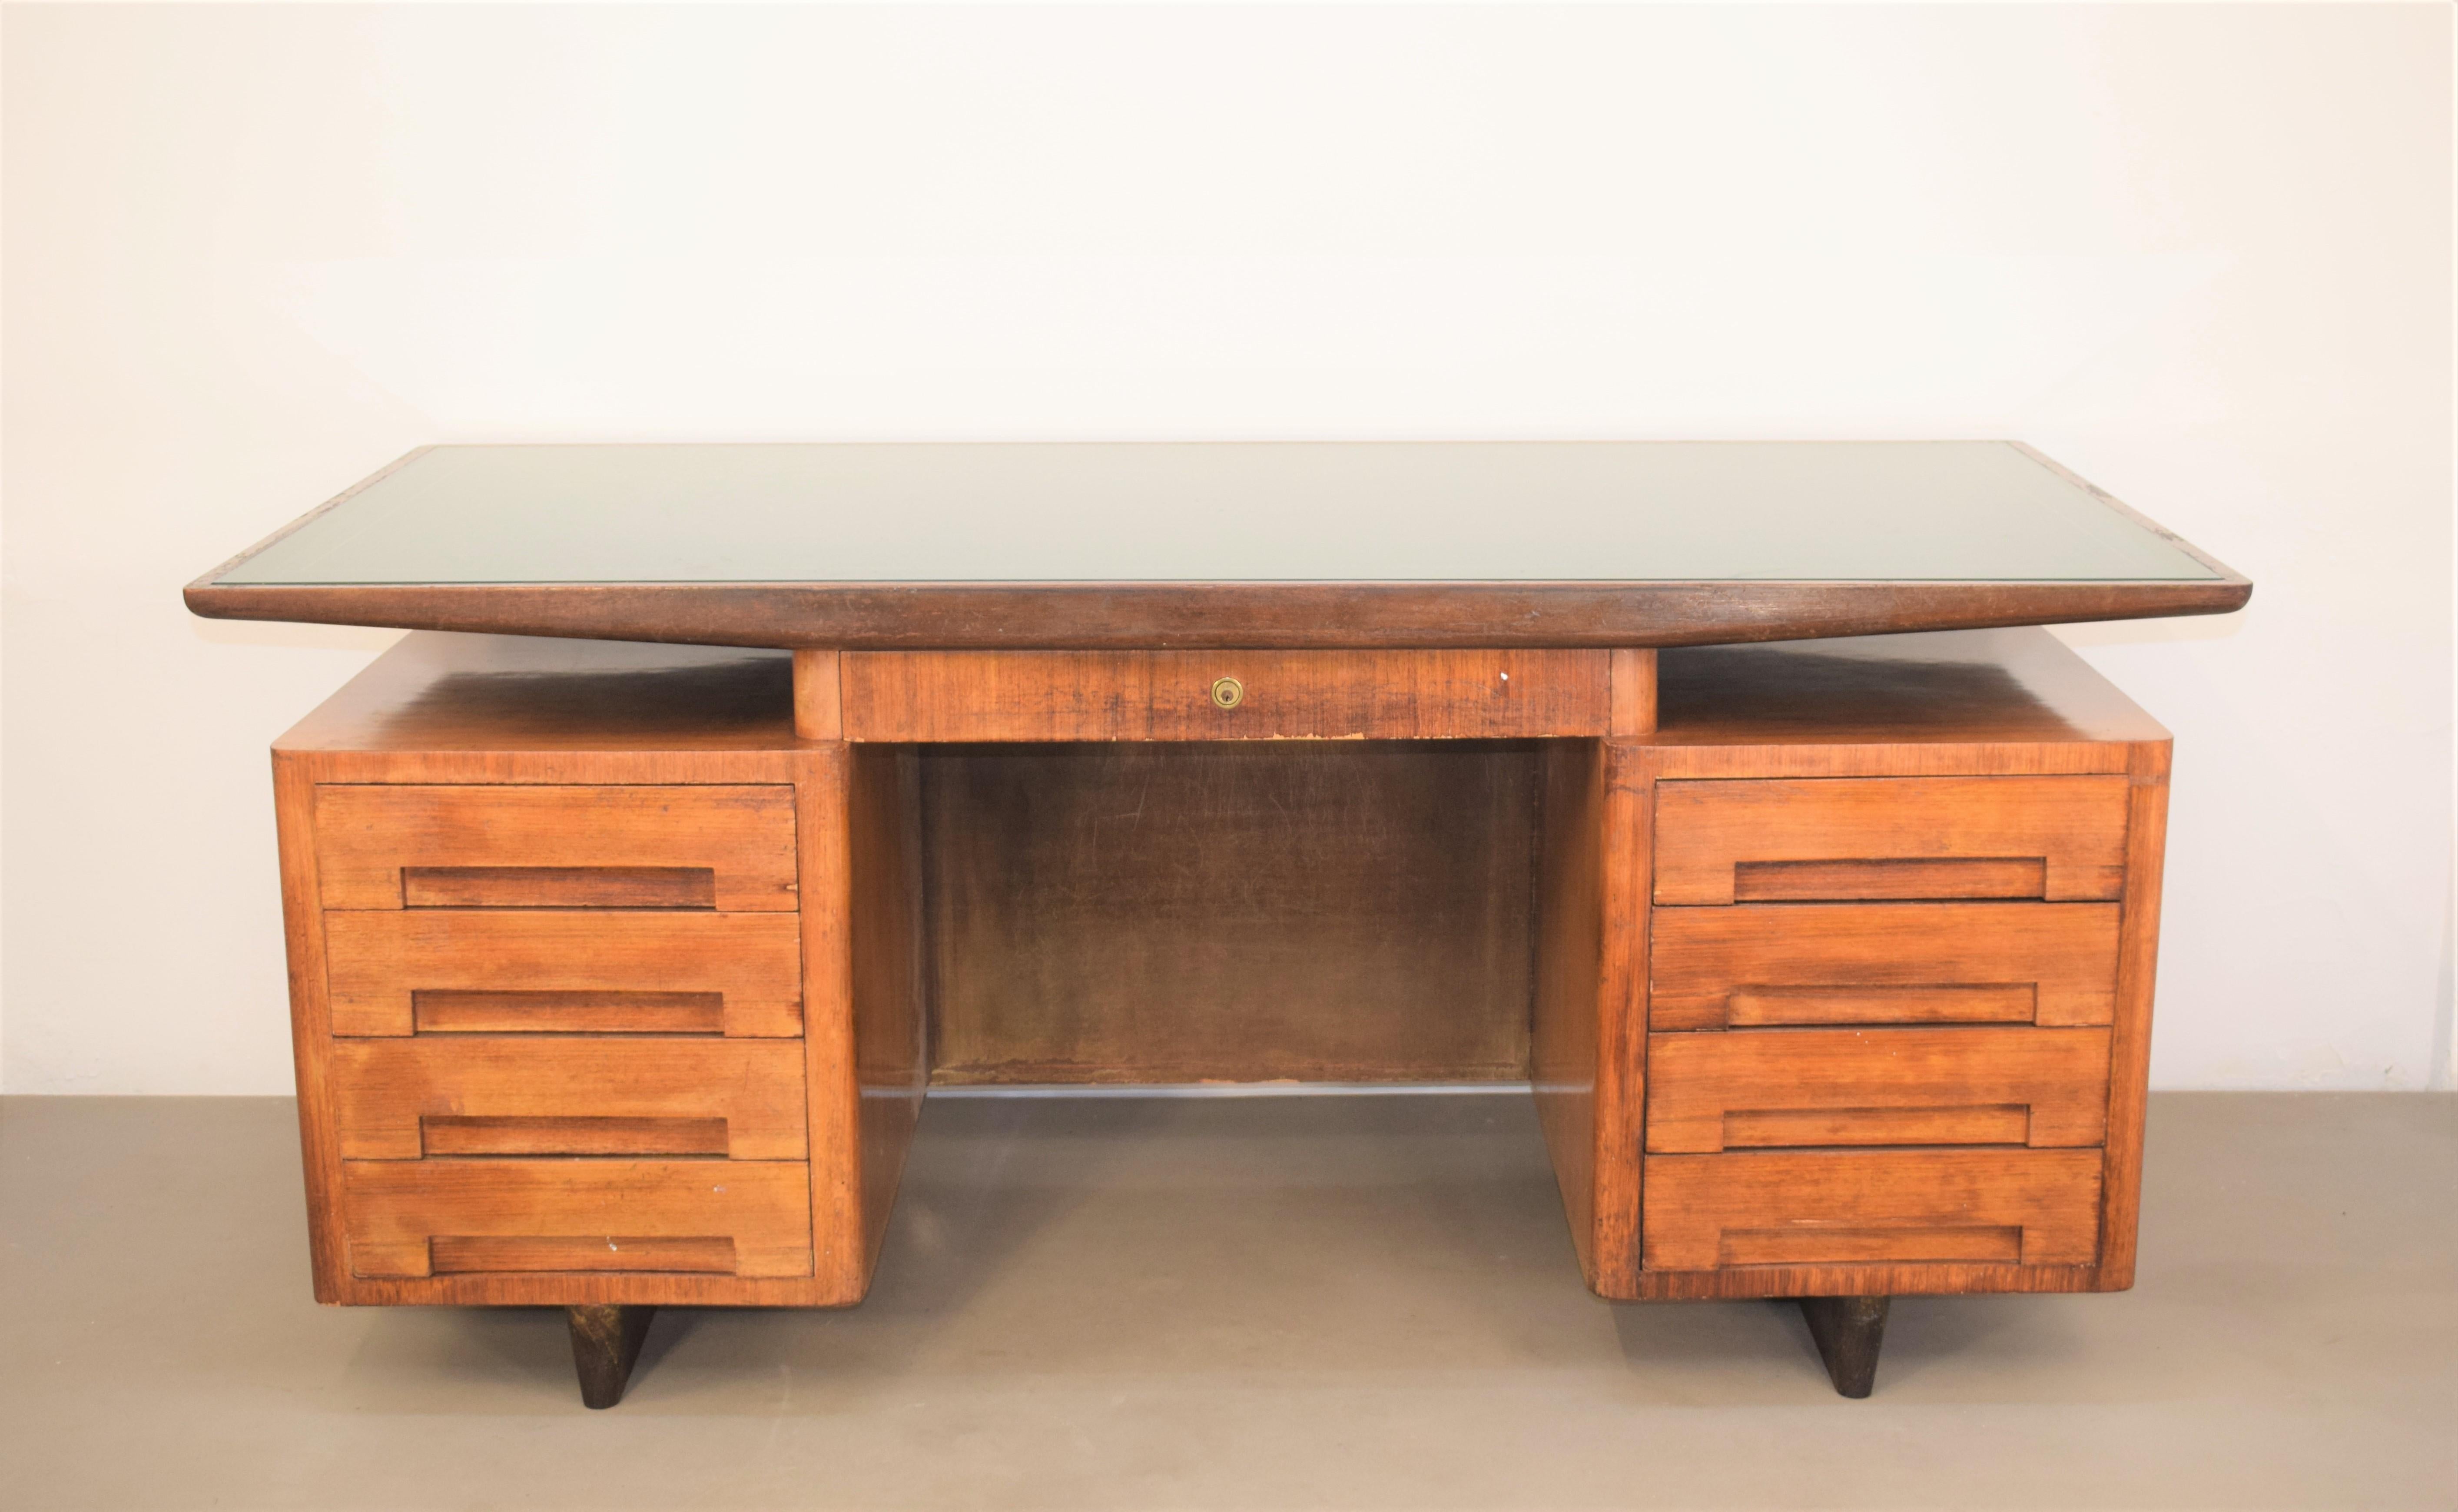 Italian desk by Gio Ponti attributed, 1950s.

Dimensions: H= 78 cm; W= 180 cm; D= 85 cm.